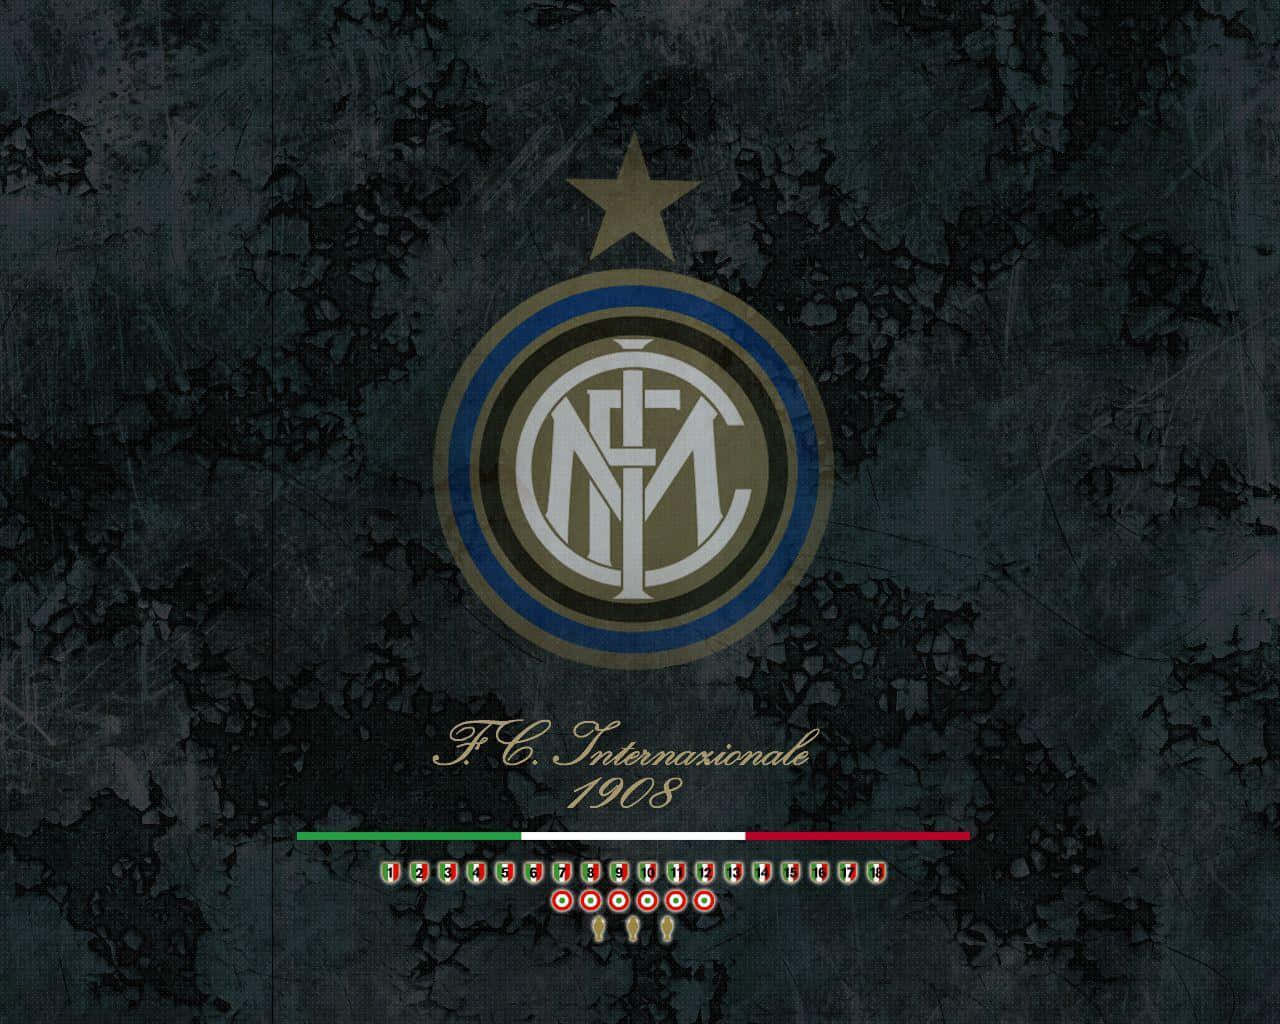 Inter Milan Team logo on a blue-striped background Wallpaper